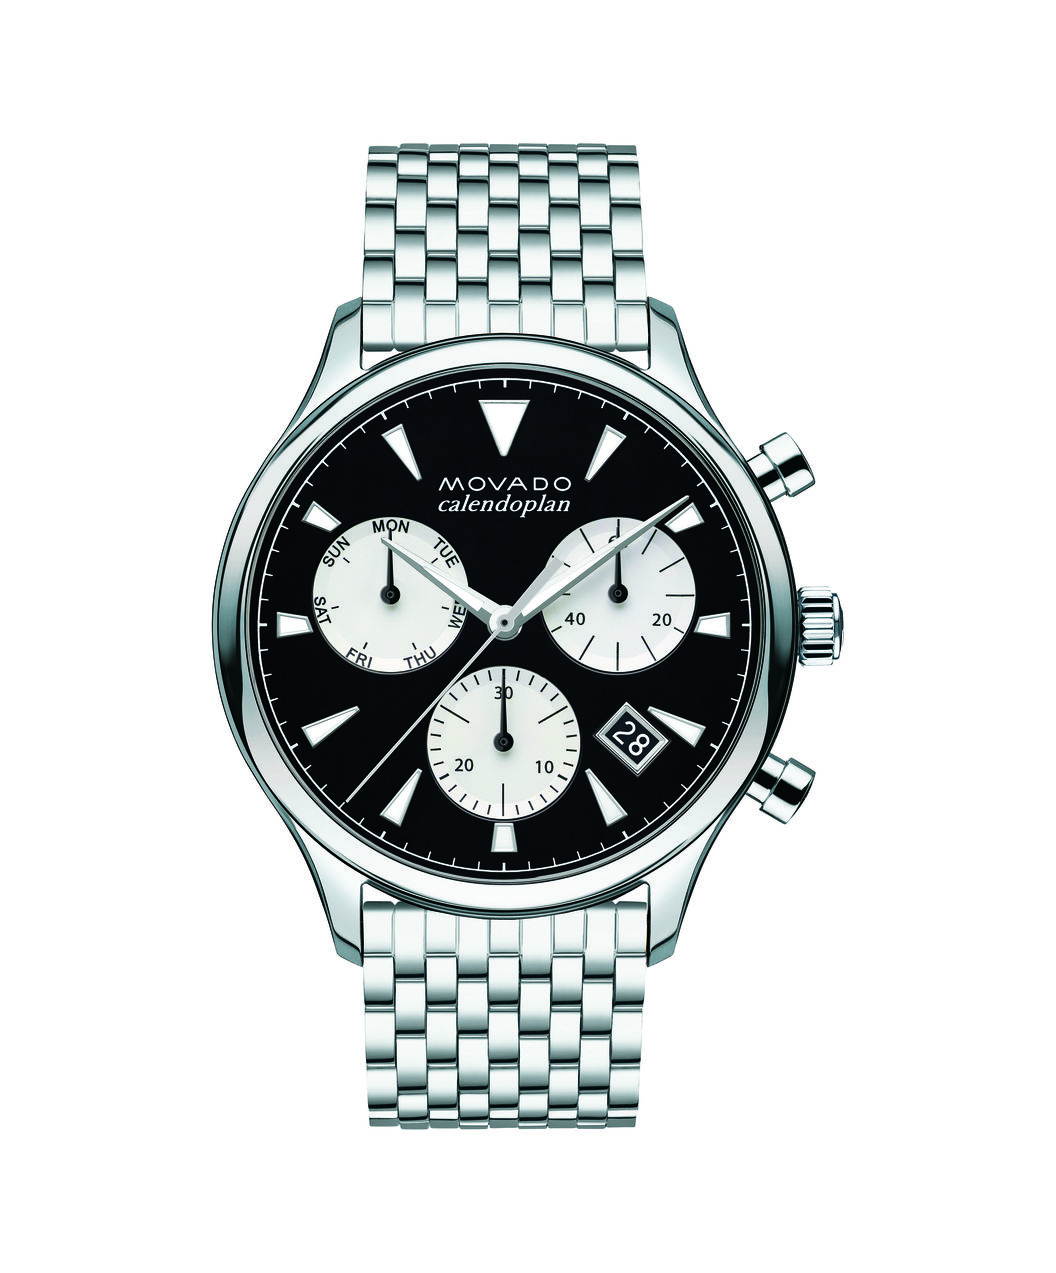 3650014 Movado Men's Heritage Series Calendoplan Chronograph Watch